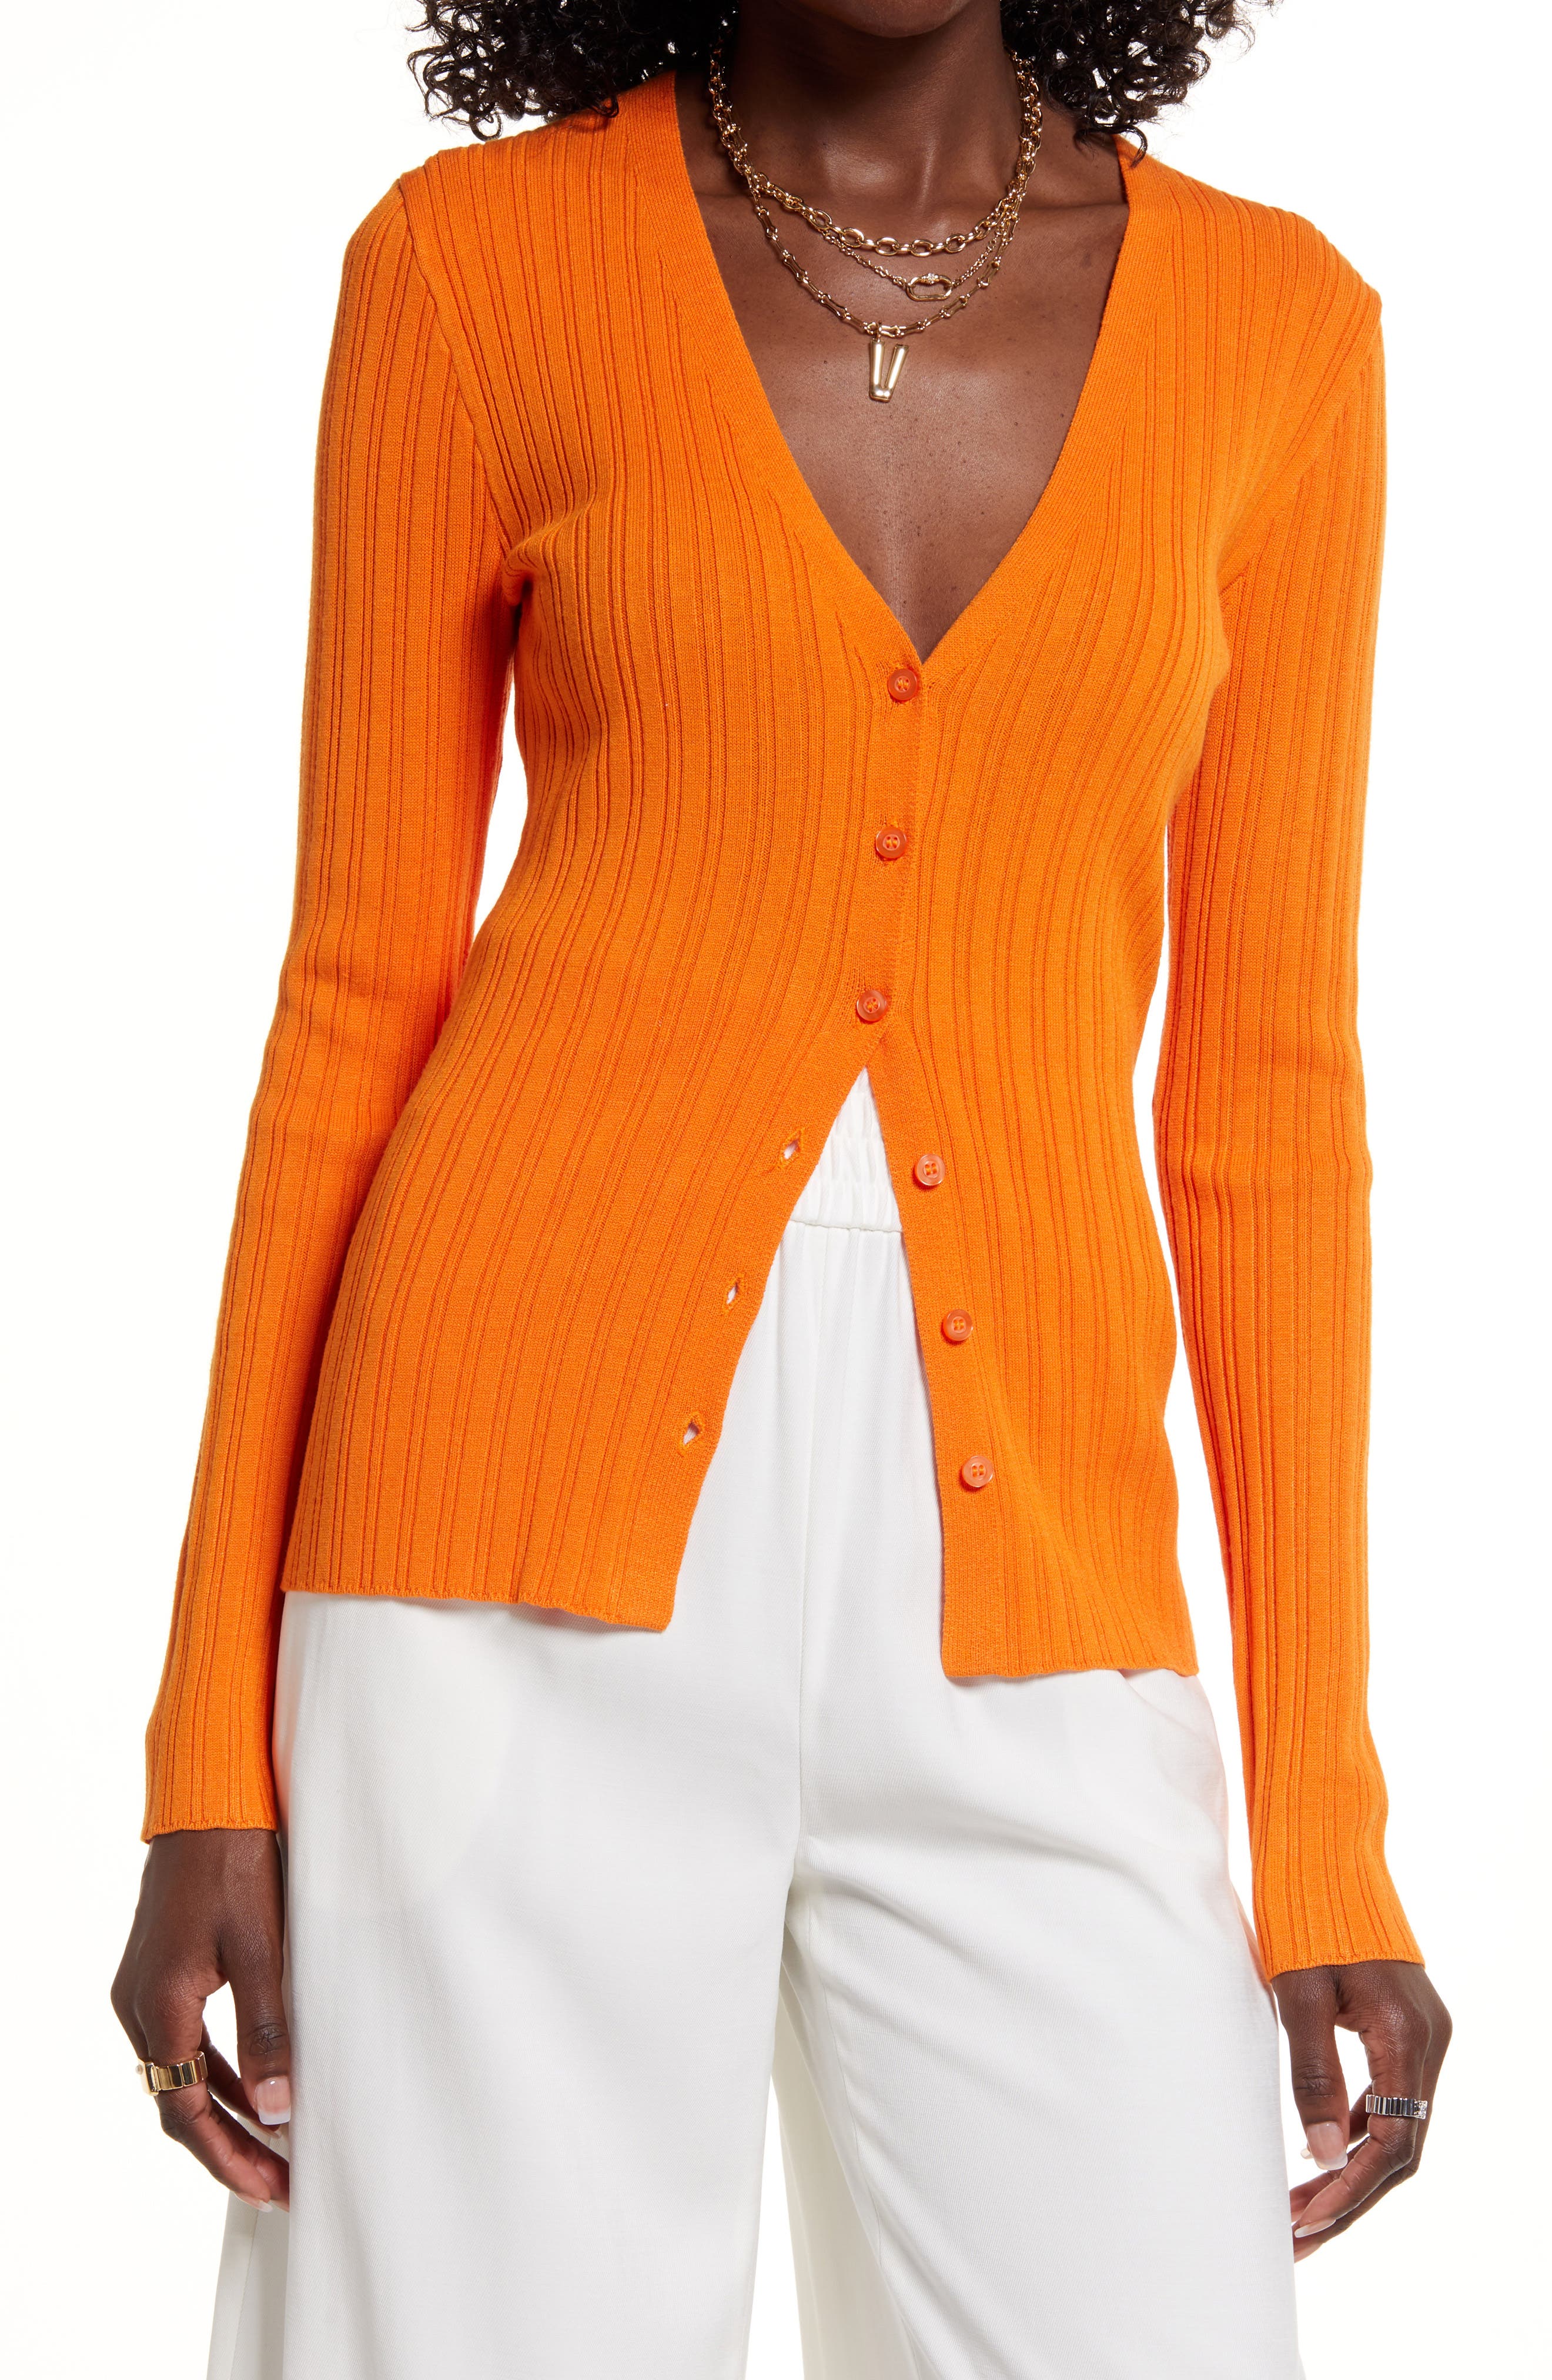 Cardigan Sweater S Cream orange & navy